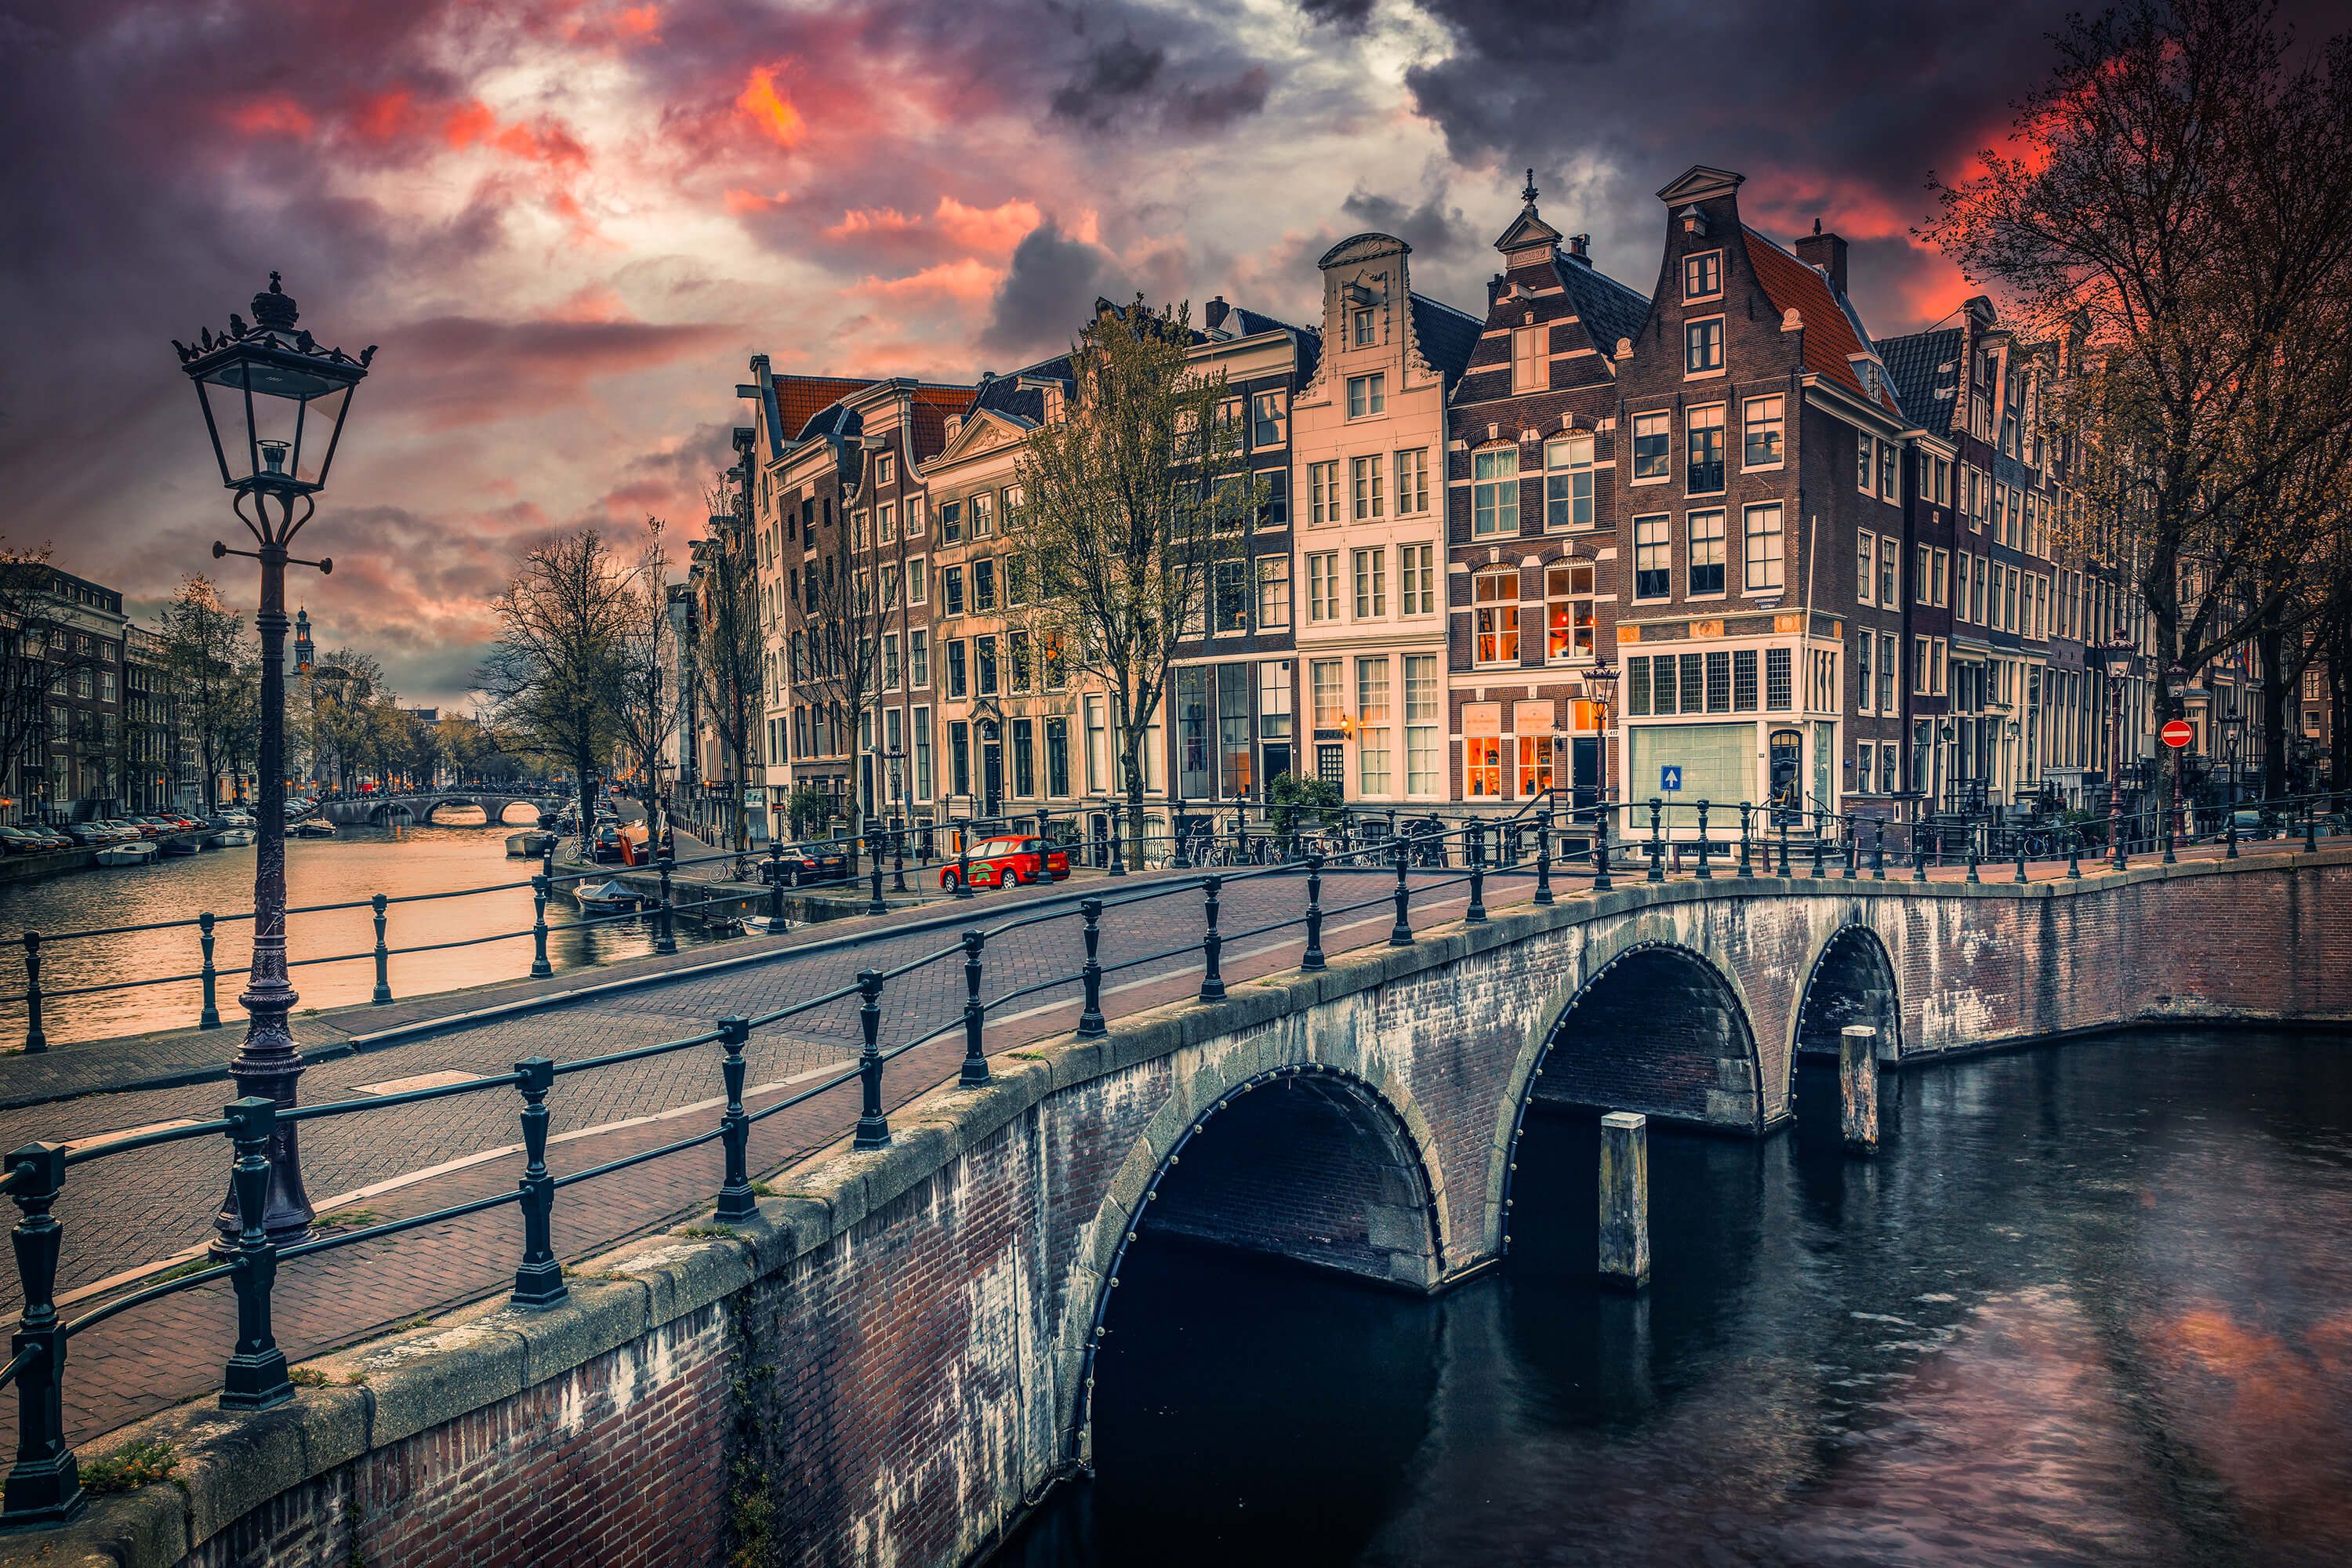  Amsterdam canal